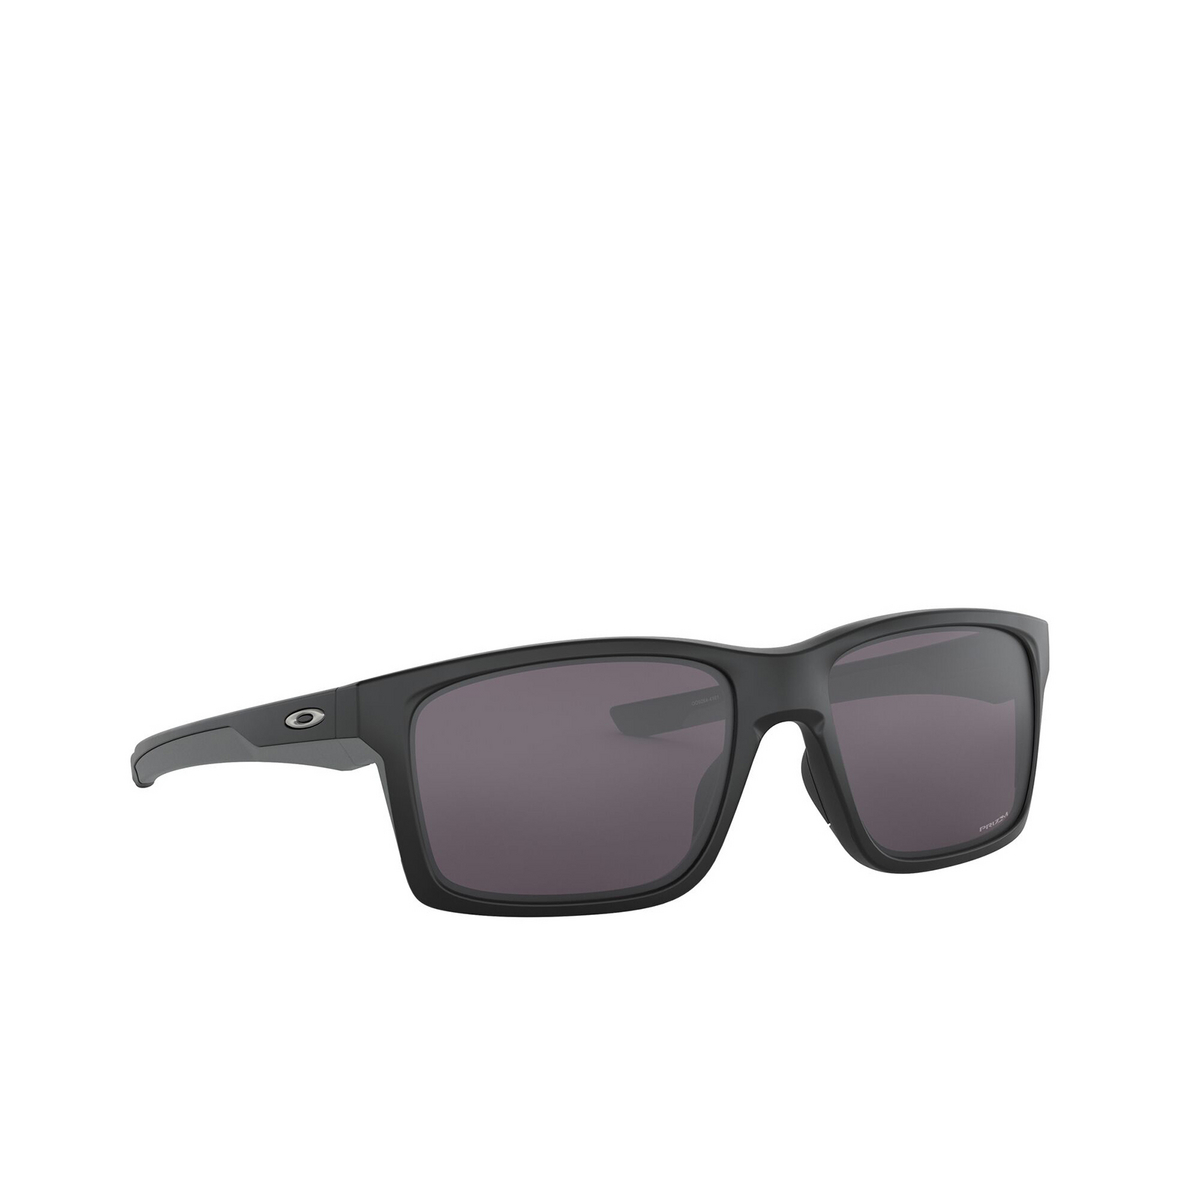 Oakley® Rectangle Sunglasses: OO9264 Mainlink color 926441 Matte Black - three-quarters view